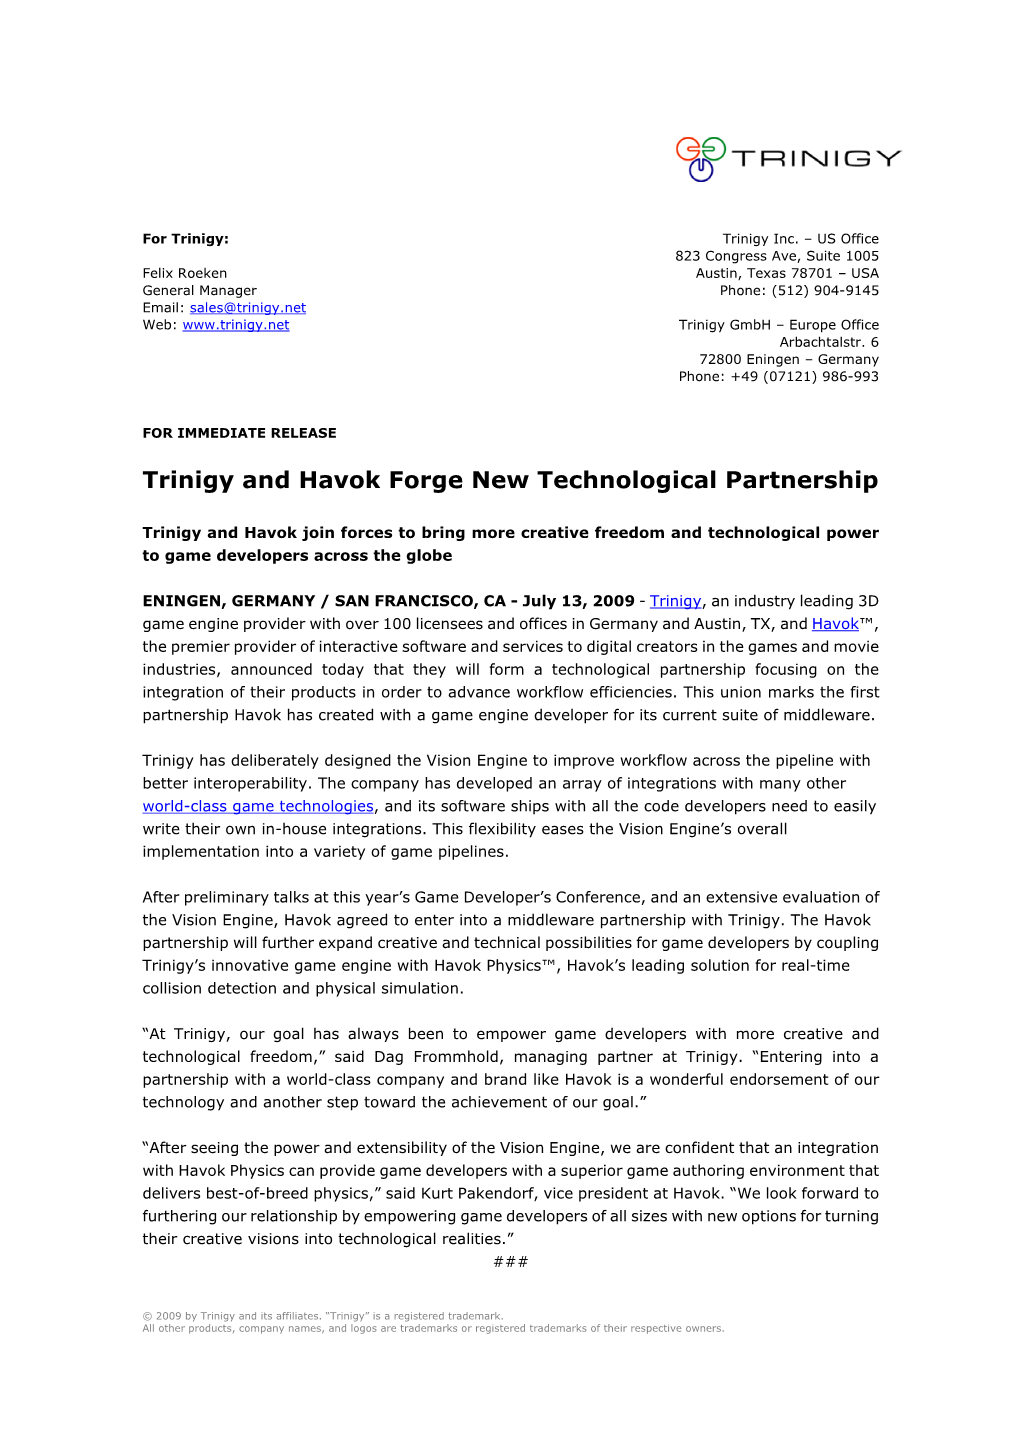 Trinigy and Havok Forge New Technological Partnership